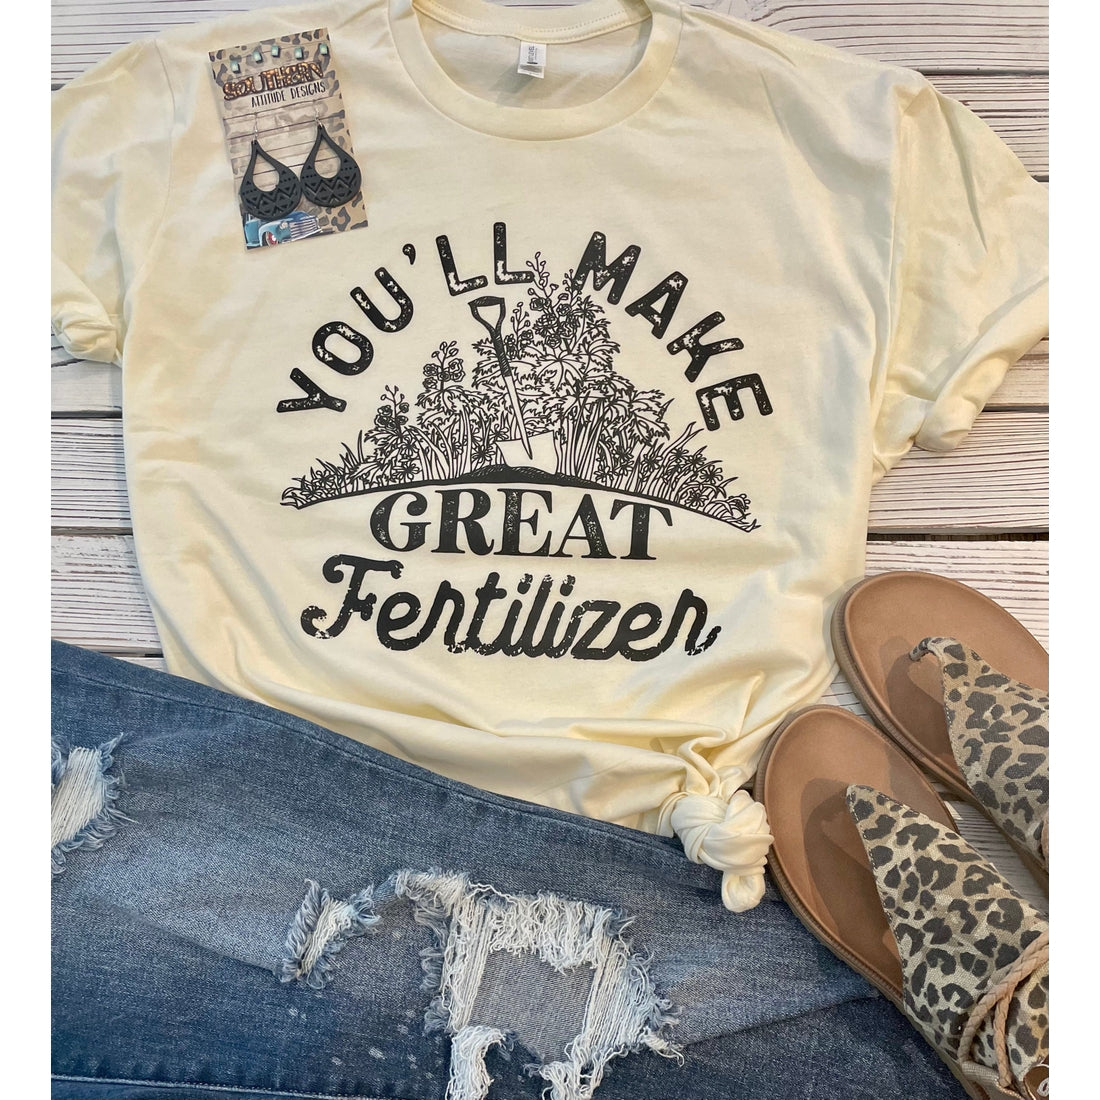 You'll Make Great Fertilizer T-Shirt